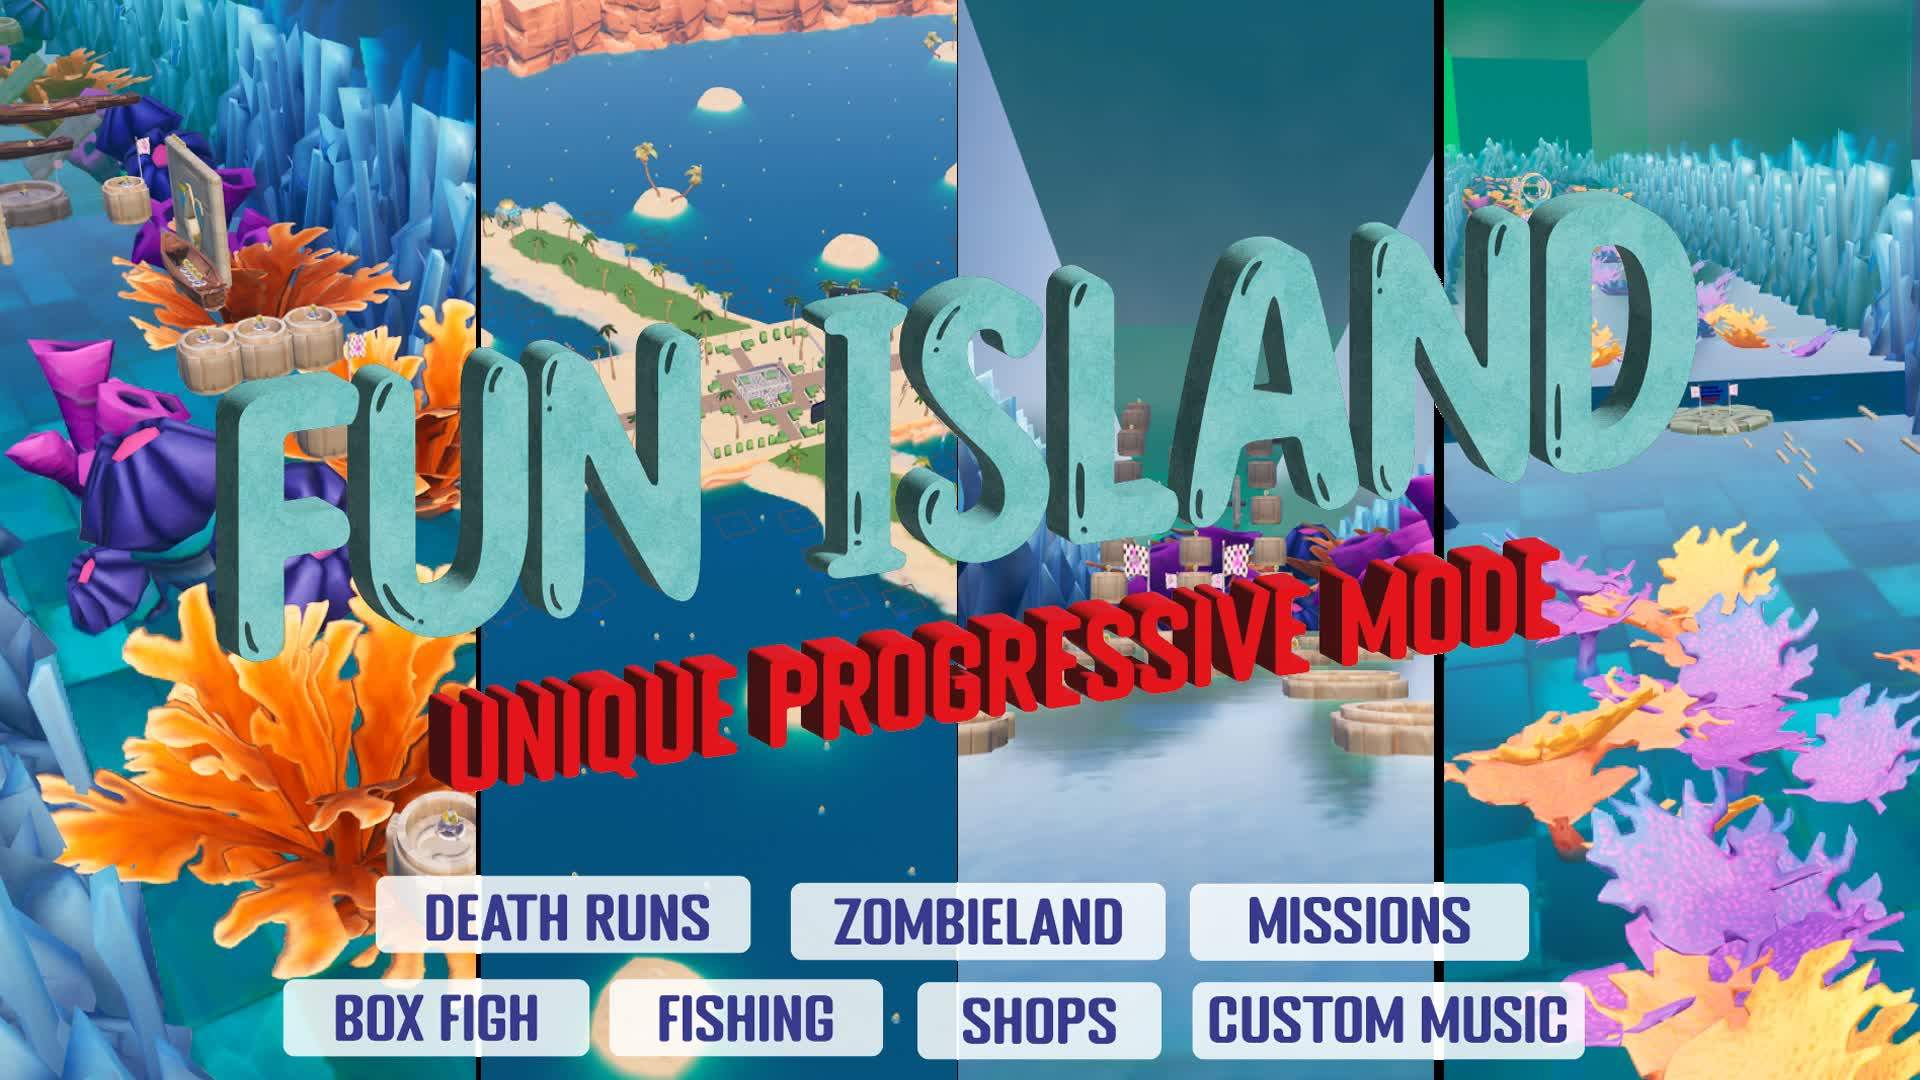 Fun Island FFA (Progressive Mode)